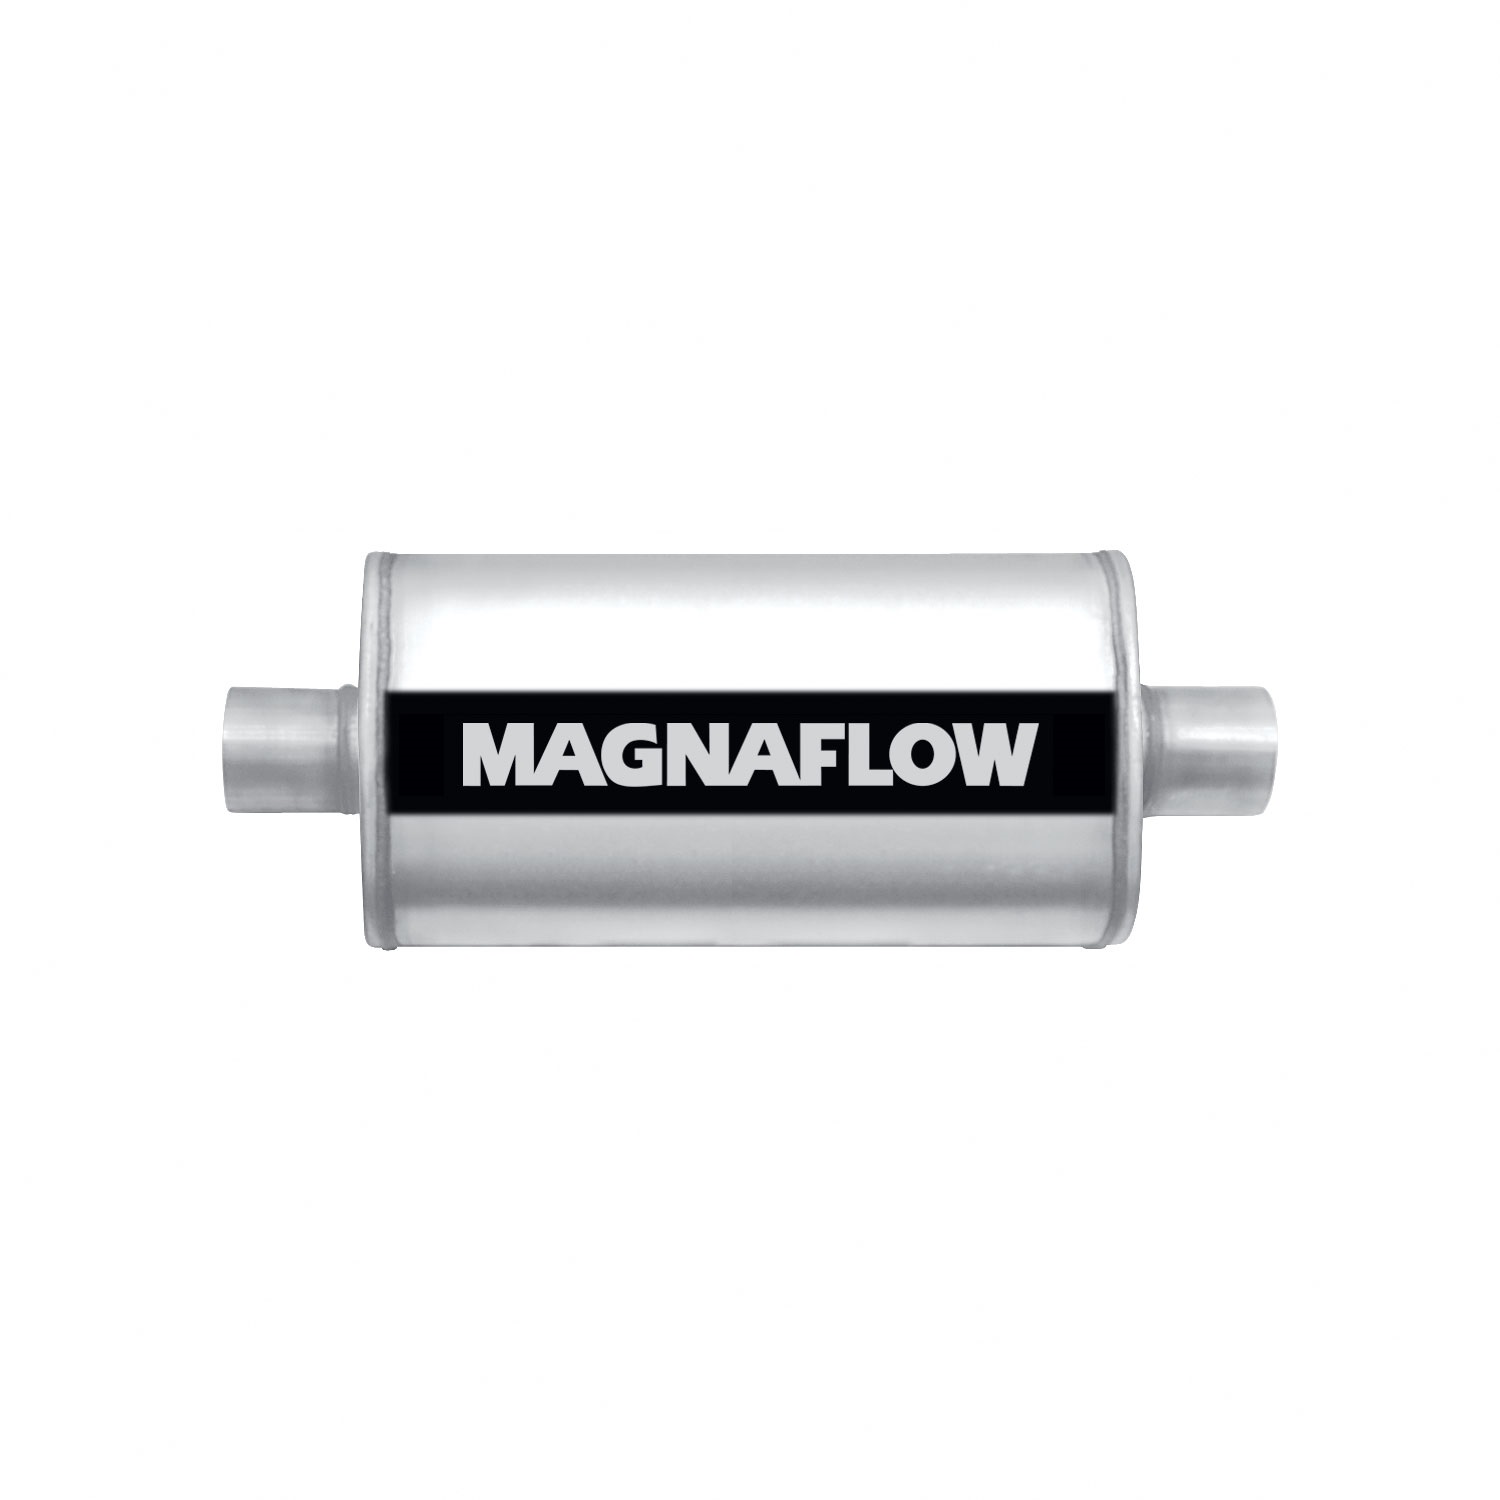 Magnaflow Performance Exhaust Magnaflow Performance Exhaust 12219 Stainless Steel Muffler